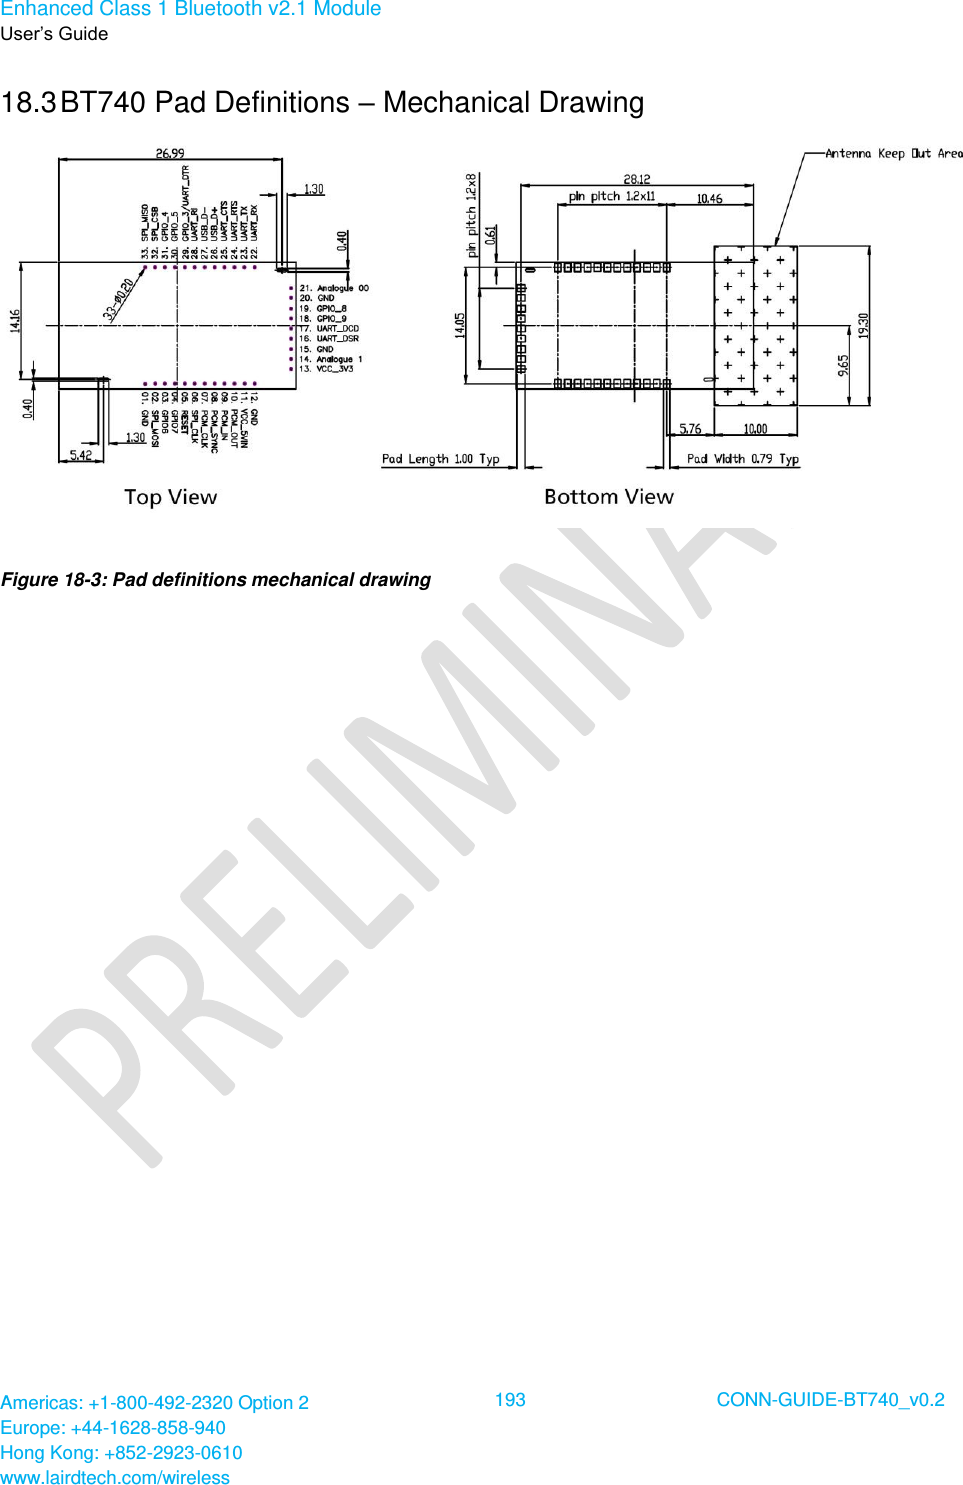 Enhanced Class 1 Bluetooth v2.1 Module User’s Guide Americas: +1-800-492-2320 Option 2 Europe: +44-1628-858-940 Hong Kong: +852-2923-0610 www.lairdtech.com/wireless  193 CONN-GUIDE-BT740_v0.2  18.3 BT740 Pad Definitions – Mechanical Drawing  Figure 18-3: Pad definitions mechanical drawing 